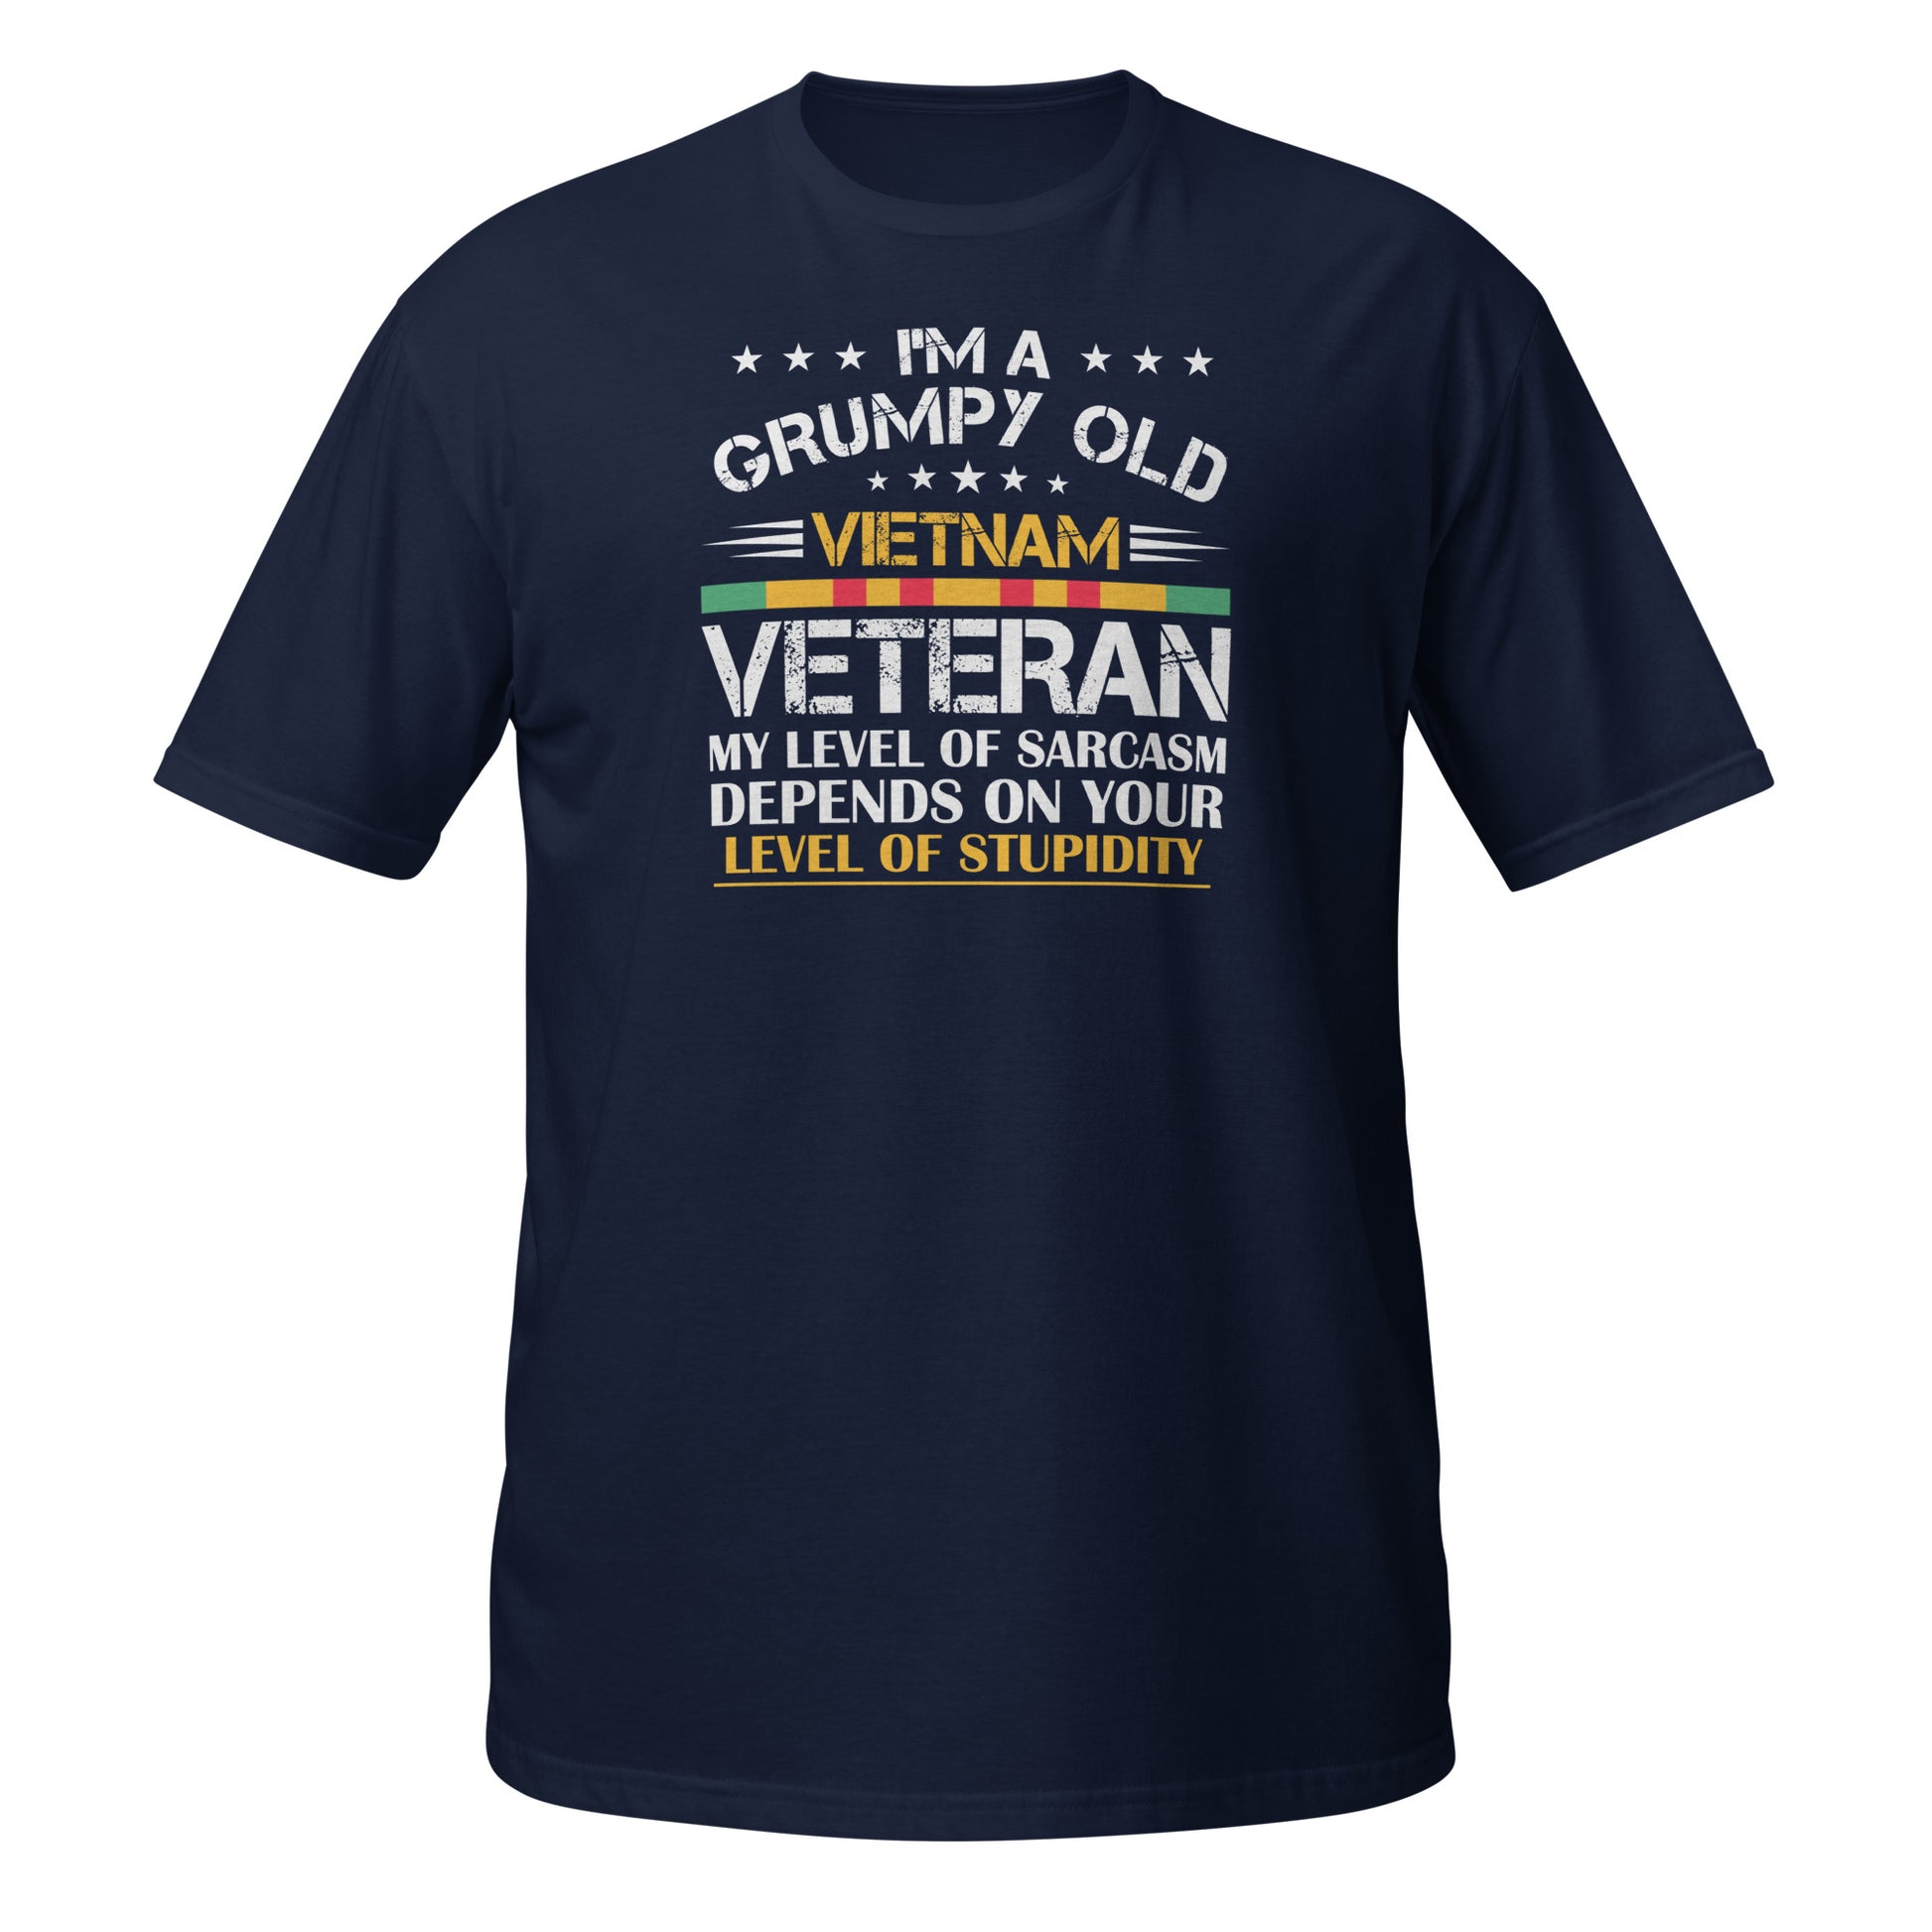 Navy Grumpy Old Veteran T-shirt / Vietnam Veteran Gift